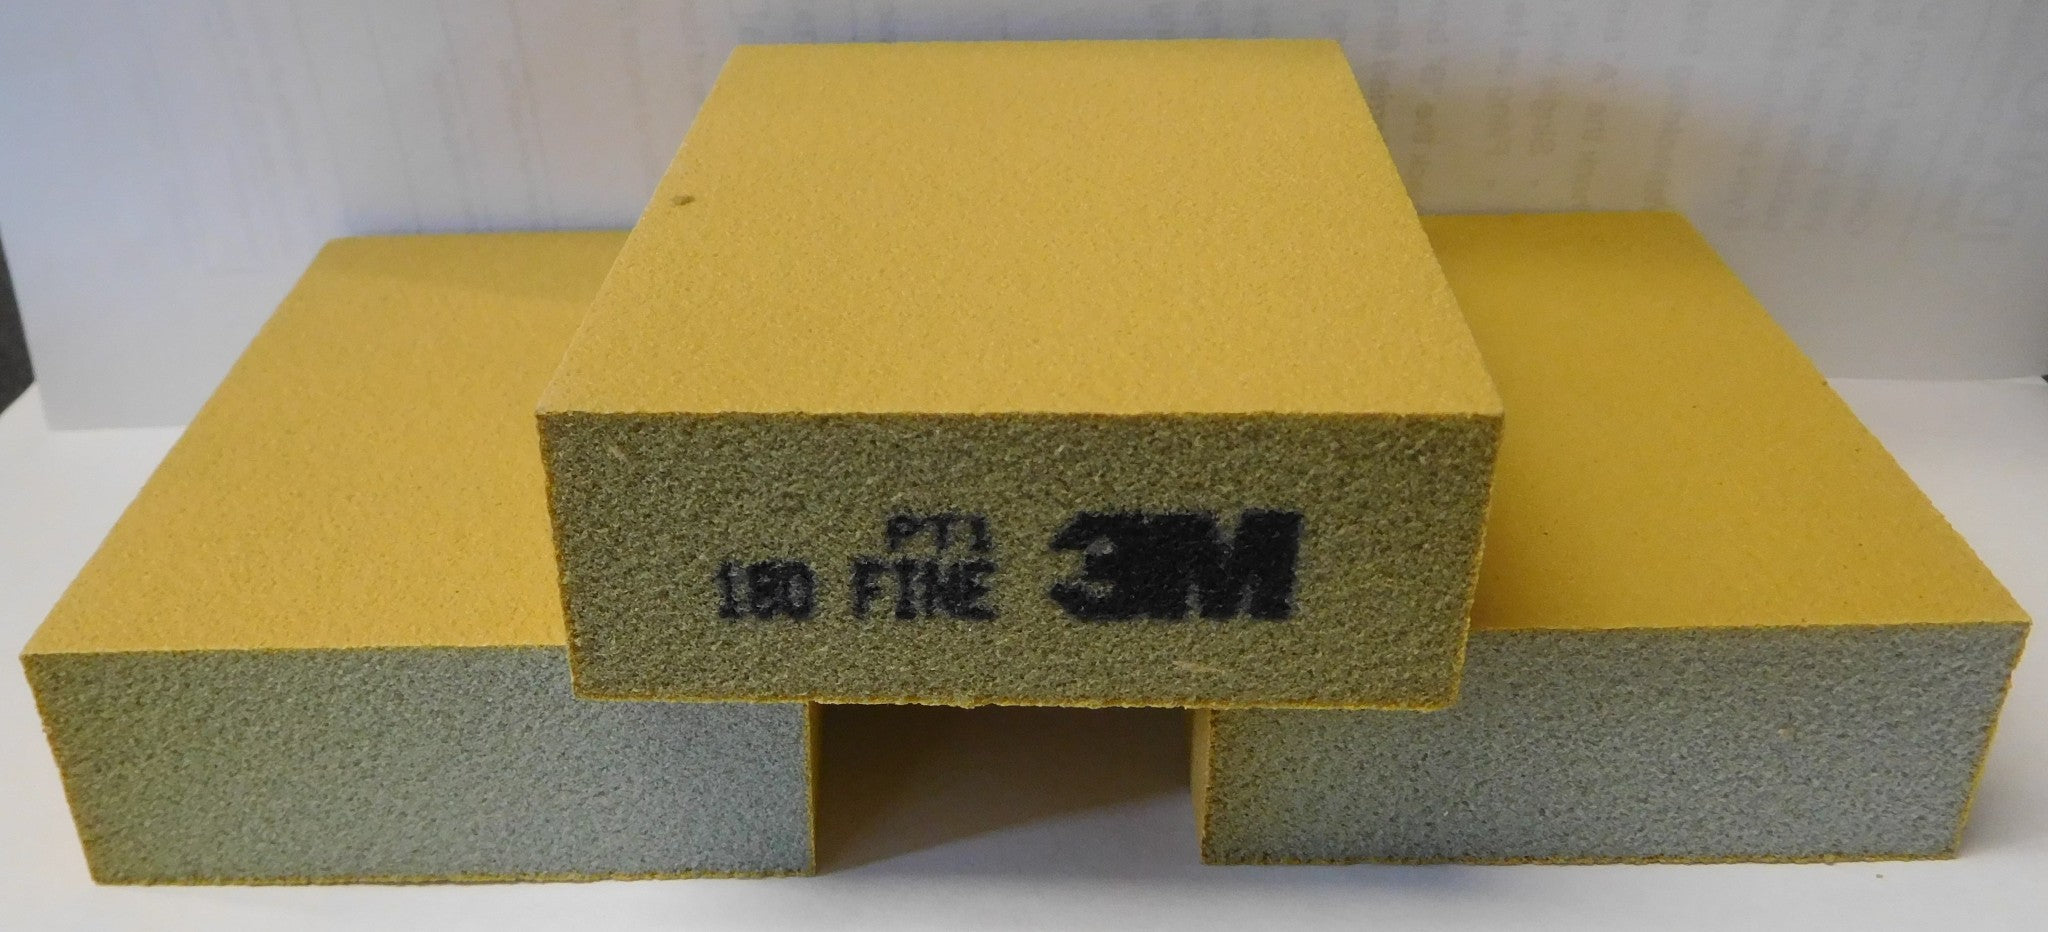 3M SandBlaster 21907-180 3-3/4" x 2-5/8" x 1" 180 Grit Sanding Sponges 3pcs USA